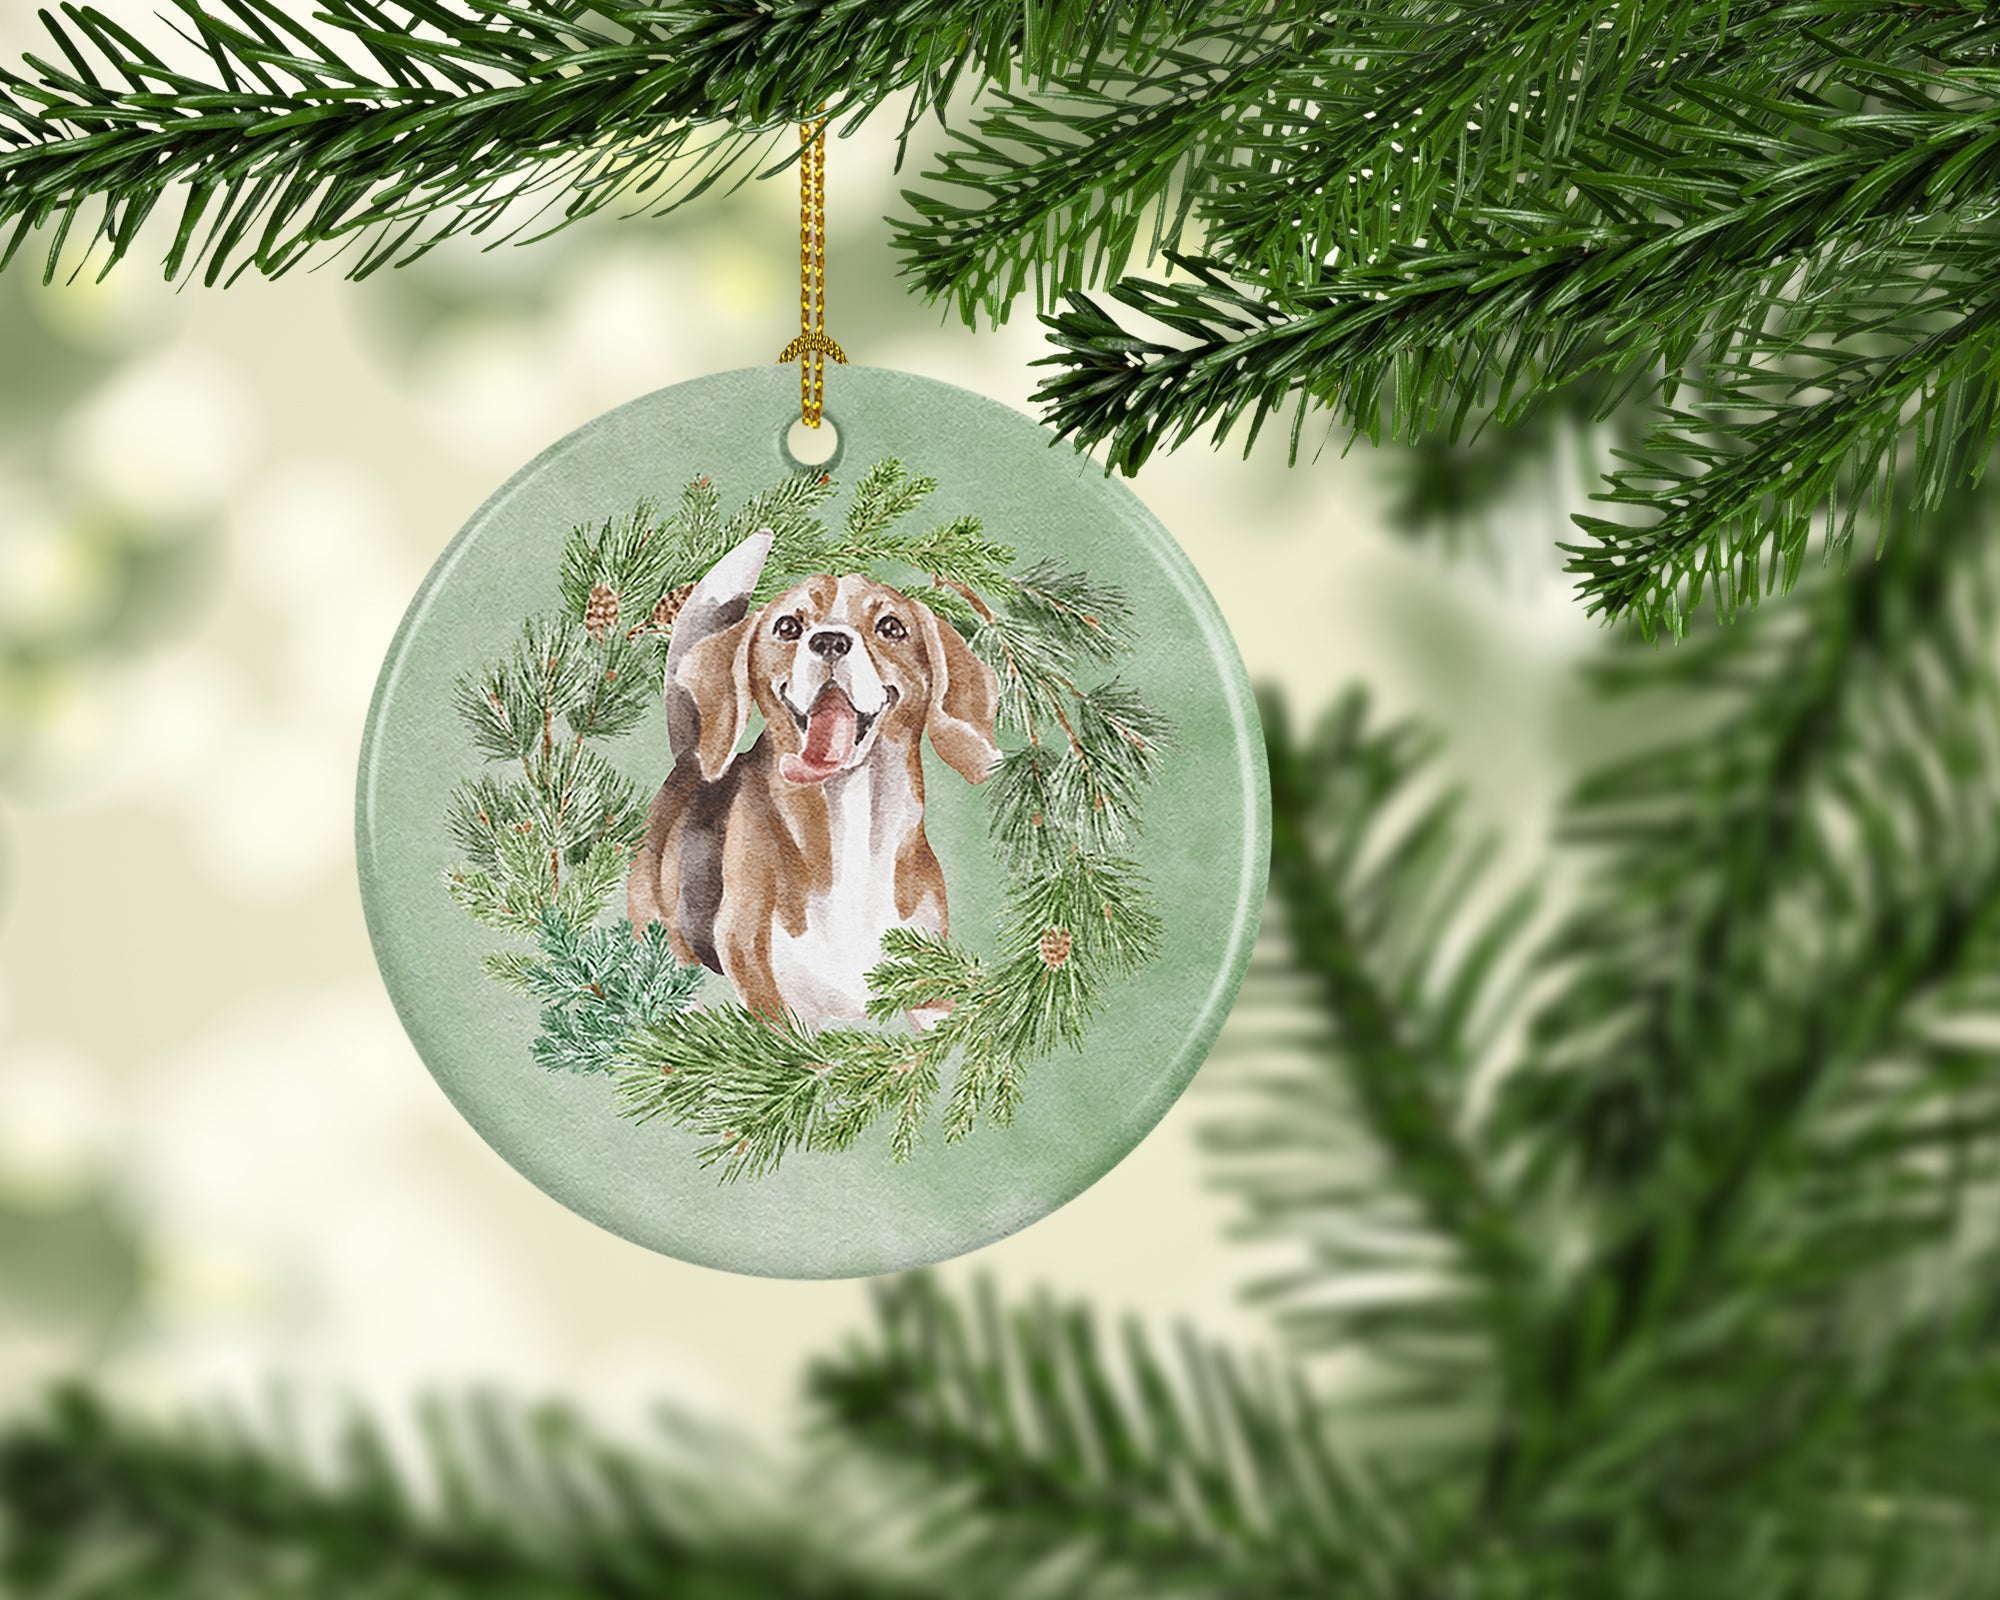 Buy this Beagle Smiling Christmas Wreath Ceramic Ornament